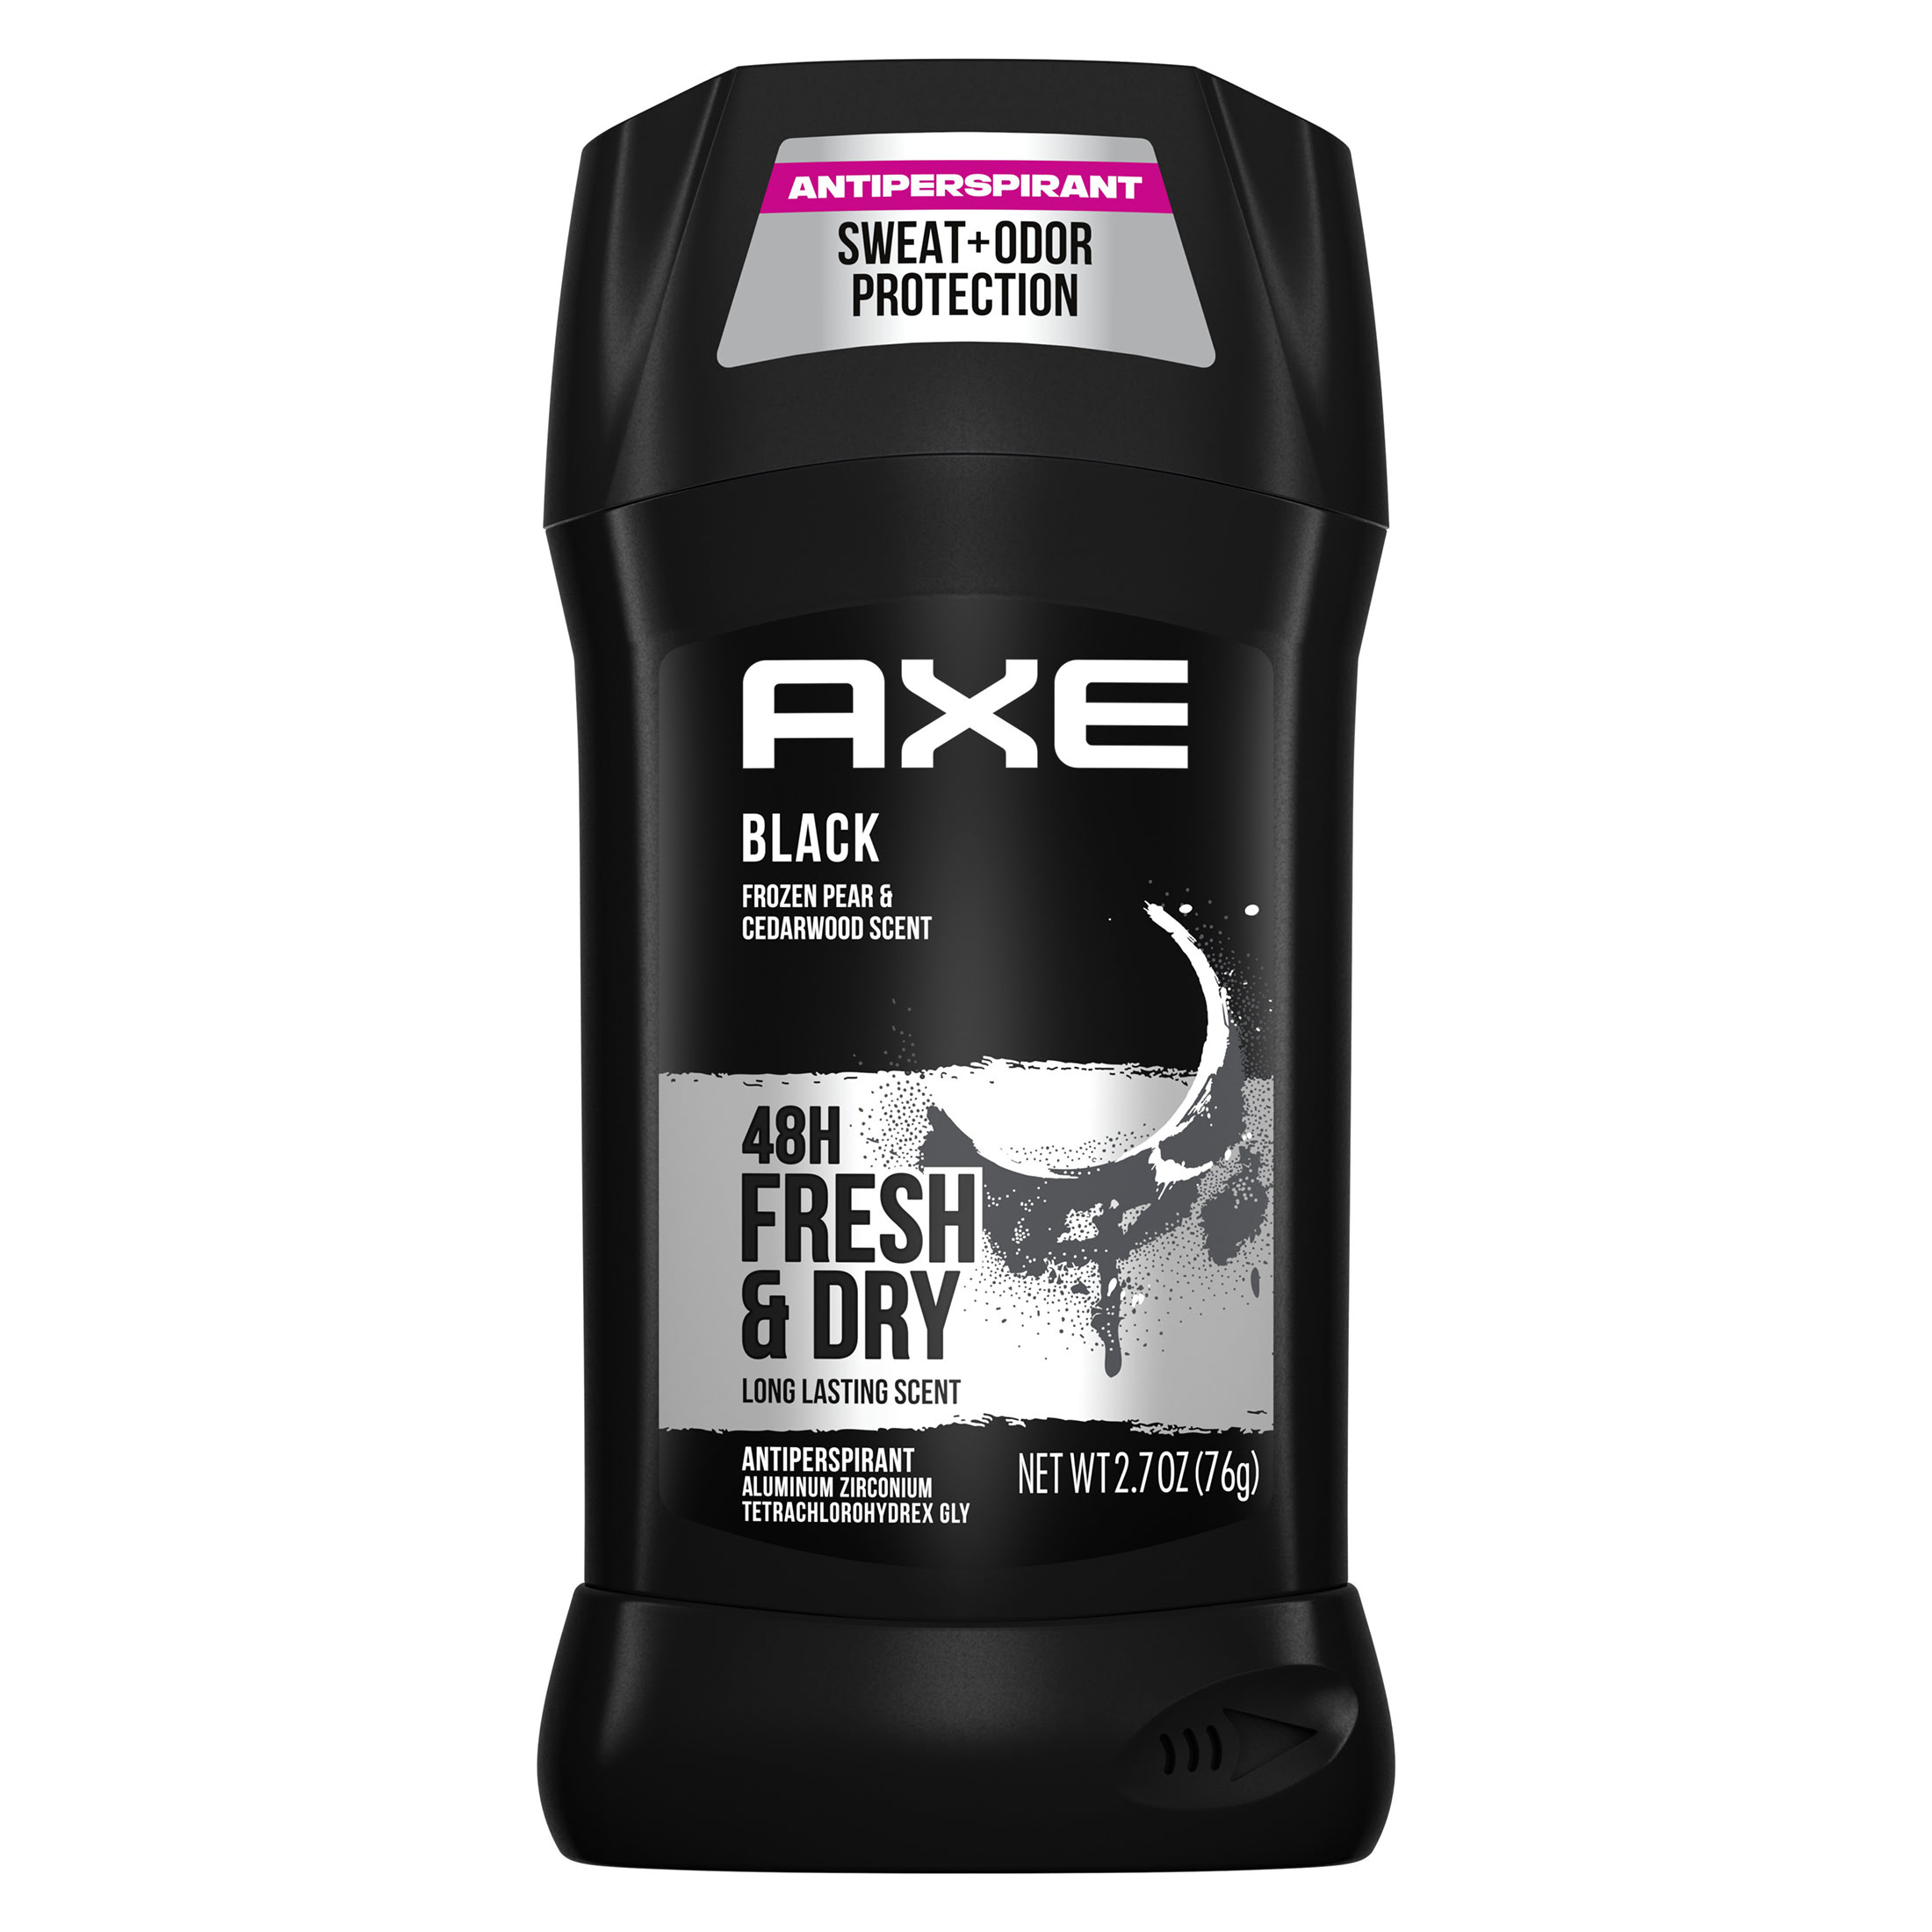 Axe Black Long Lasting Men's Antiperspirant Deodorant Stick, Frozen Pear and Cedarwood, 2.7 oz - image 1 of 8